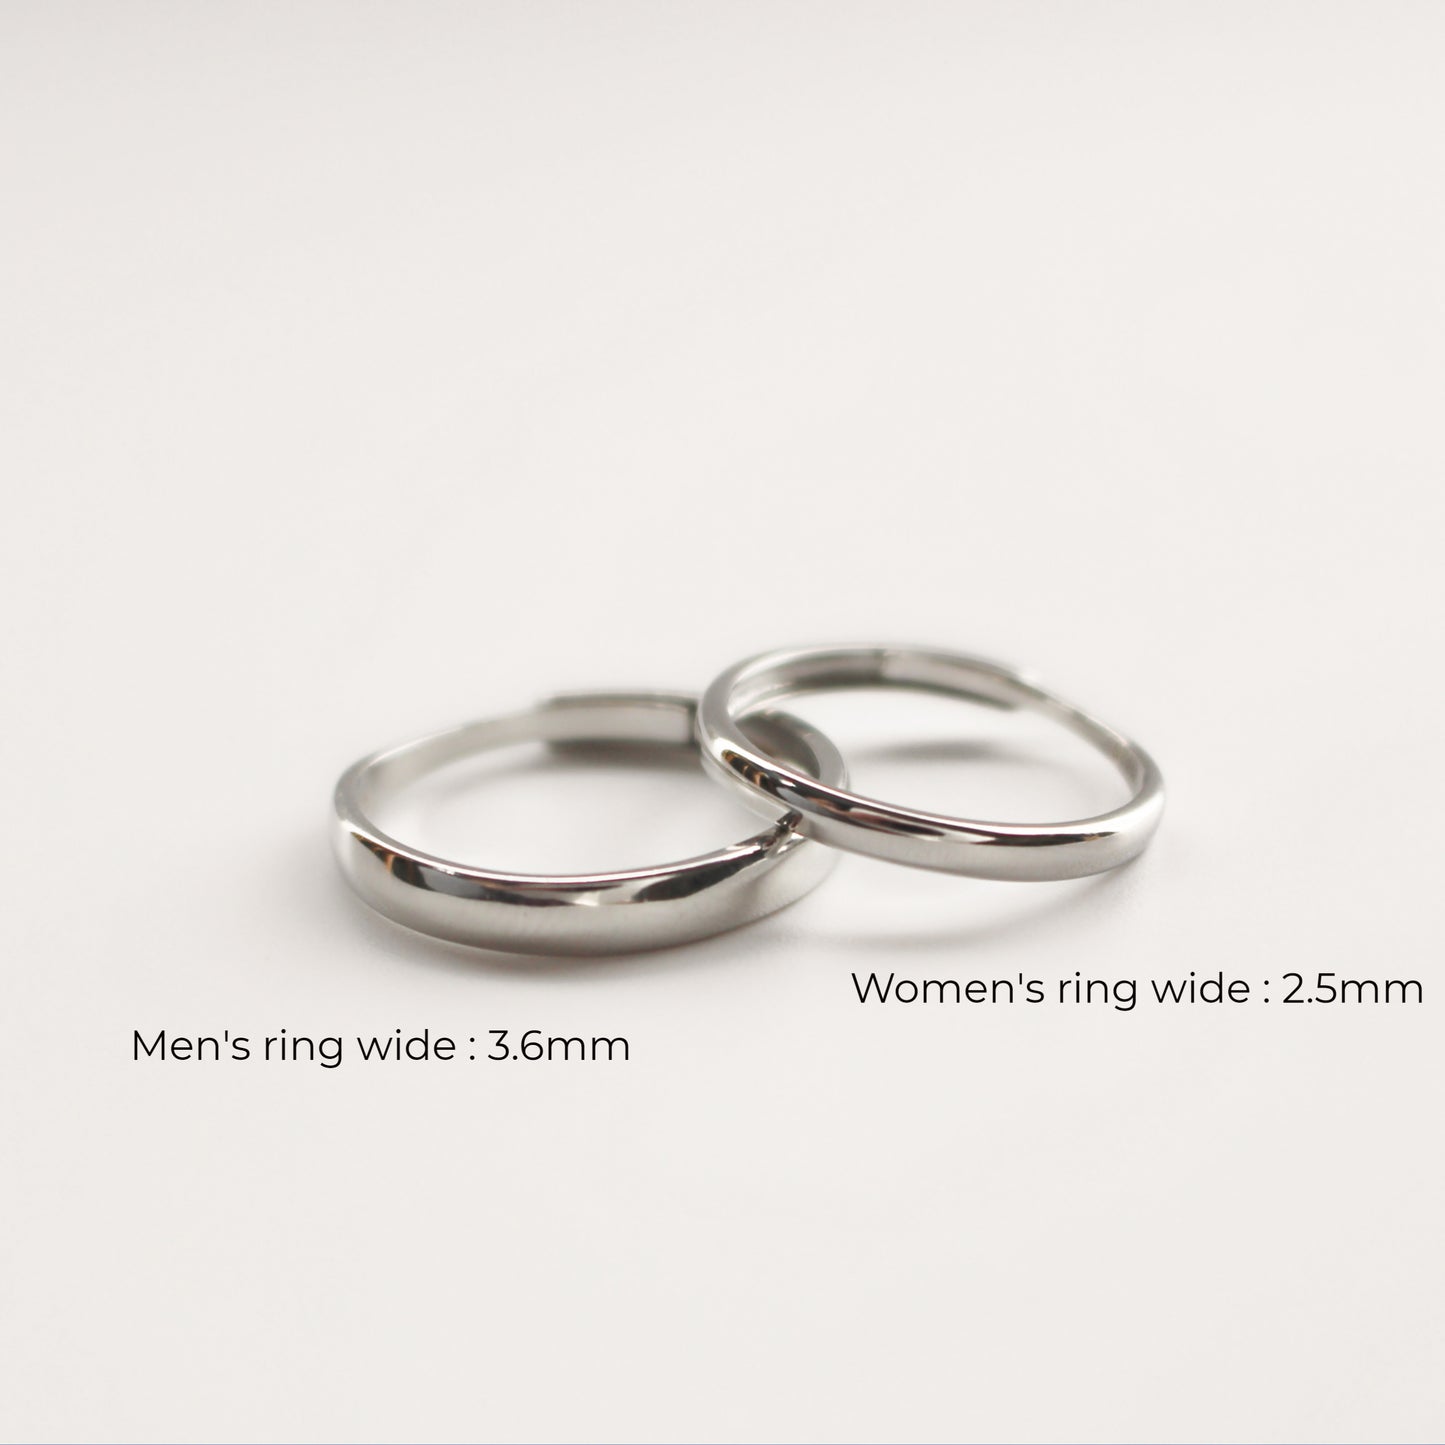 Waterproof ∙ 925 Sterling Silver Couple Rings ∙ Simple Band Ring ∙ Friendship Rings ∙ Men & Woman ∙ Adjustable Set of Band Rings